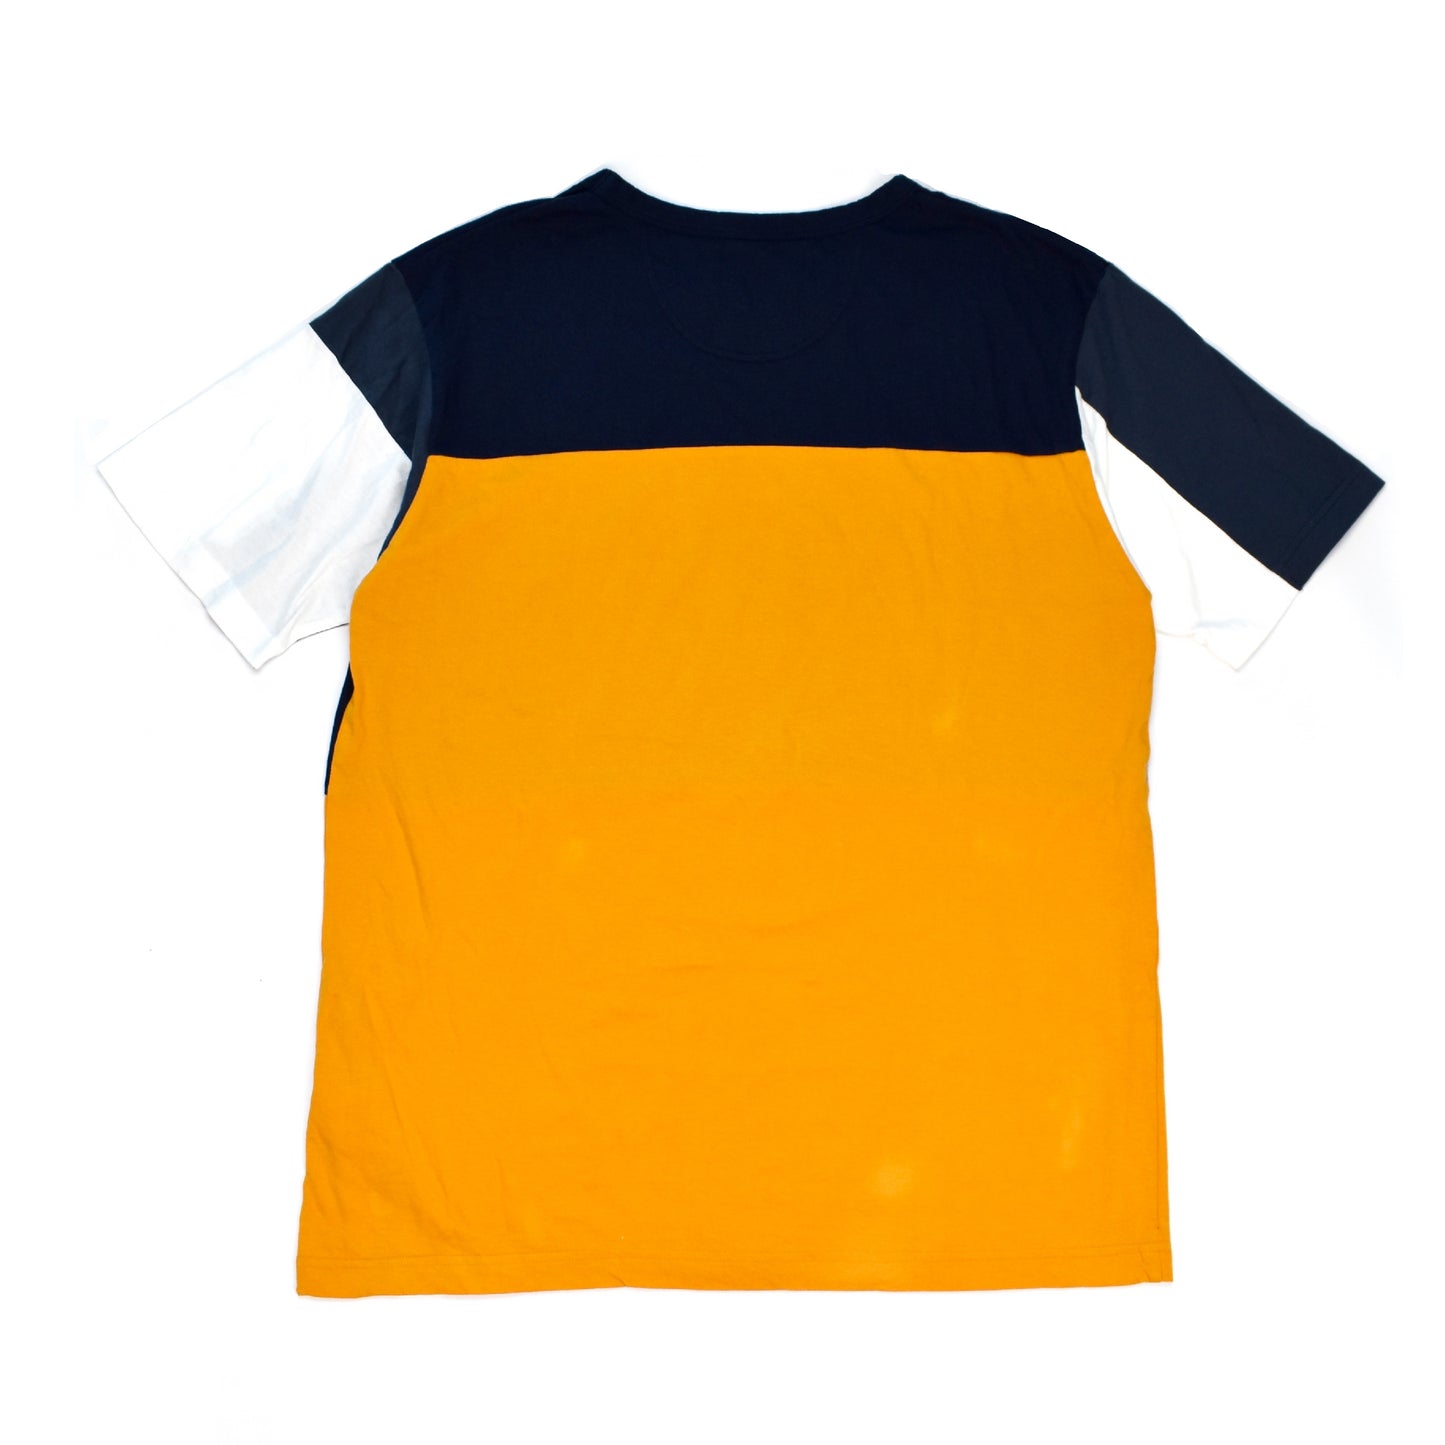 White Mountaineering - Navy & Orange Color Block T-Shirt